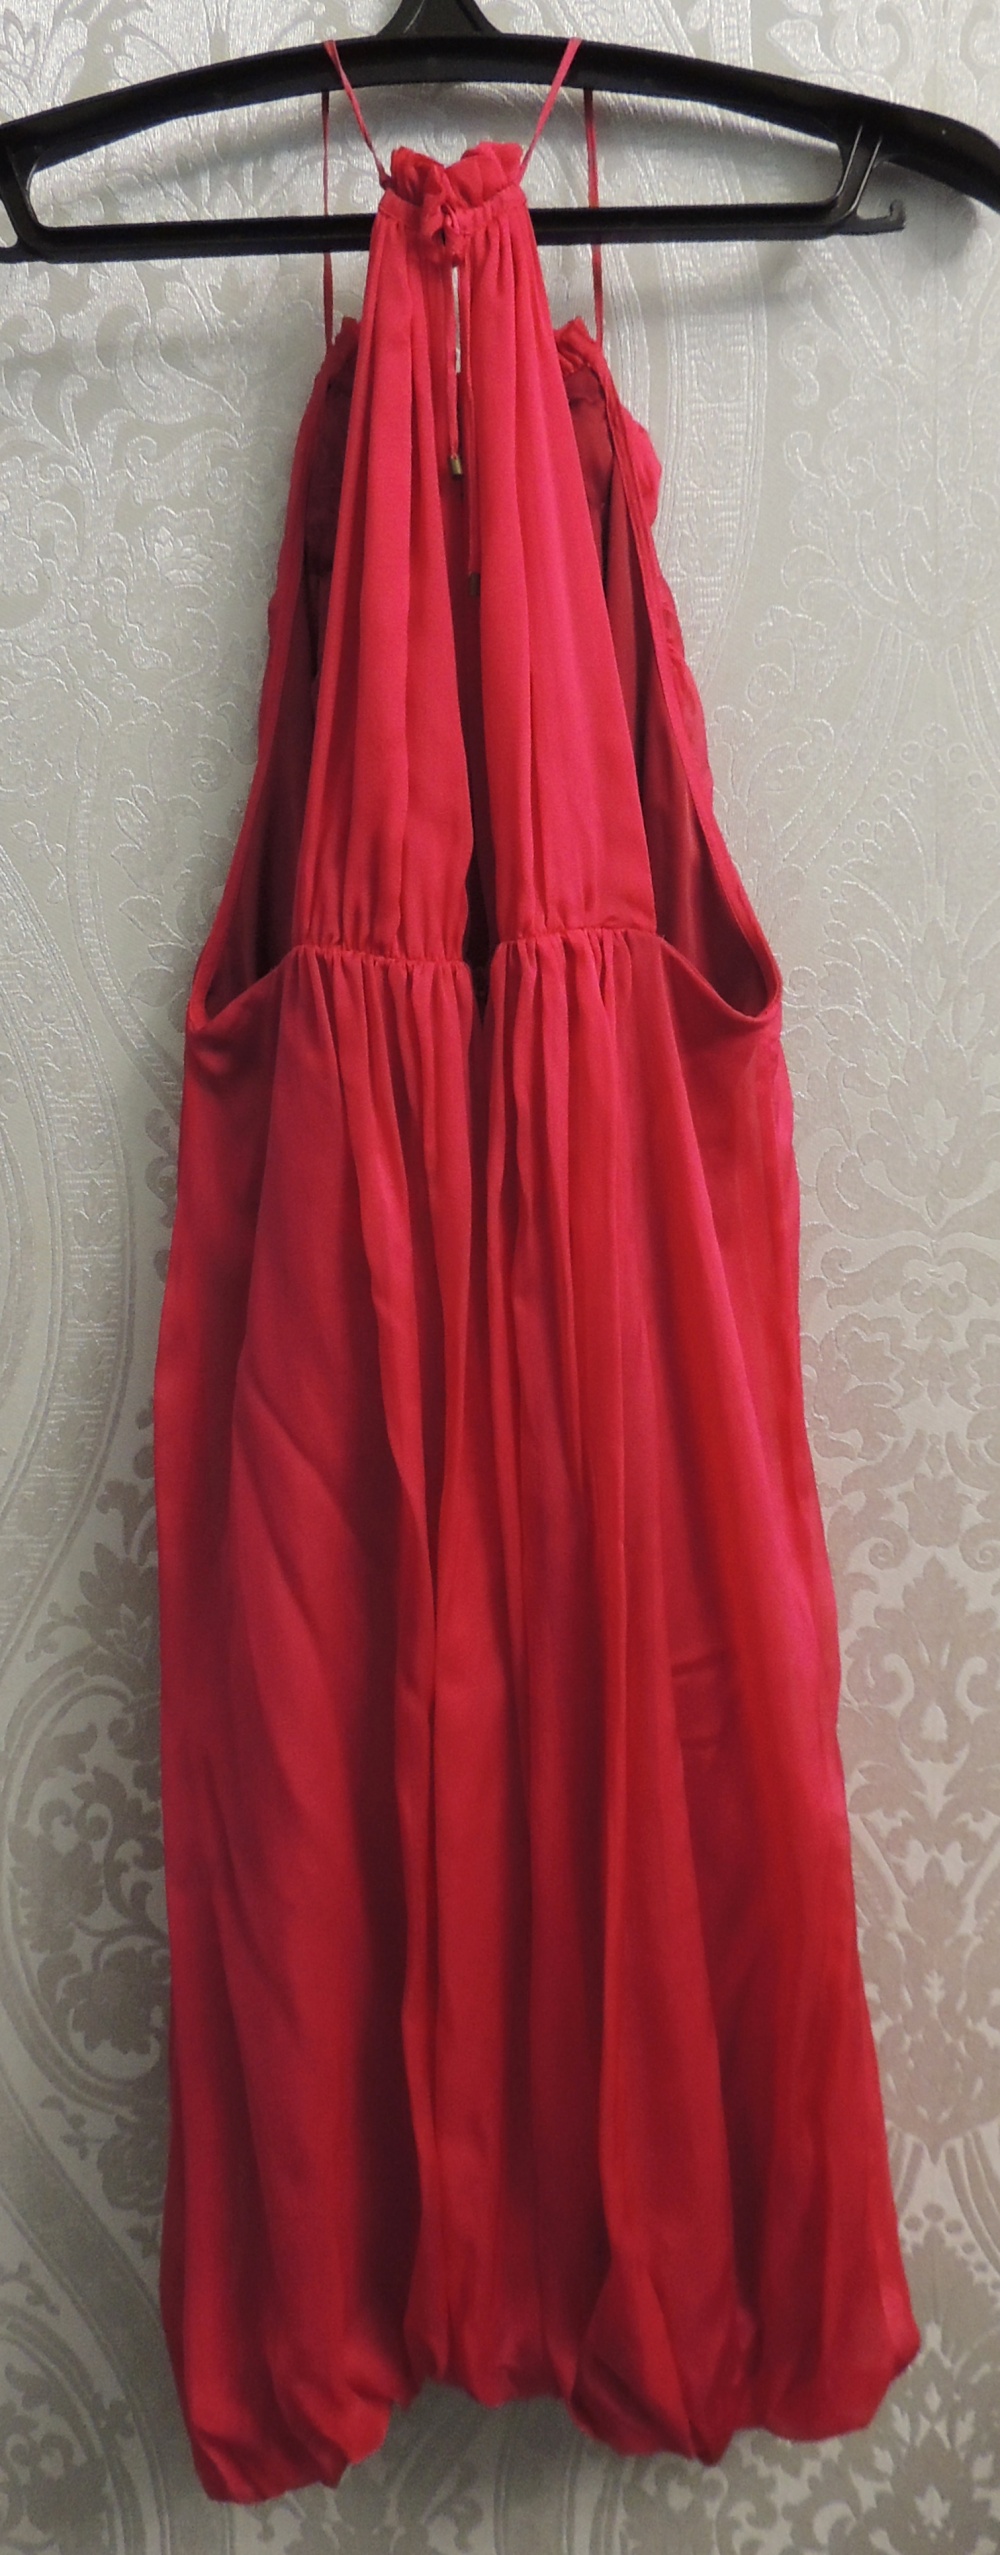 Платье Zara. 44-46 размер